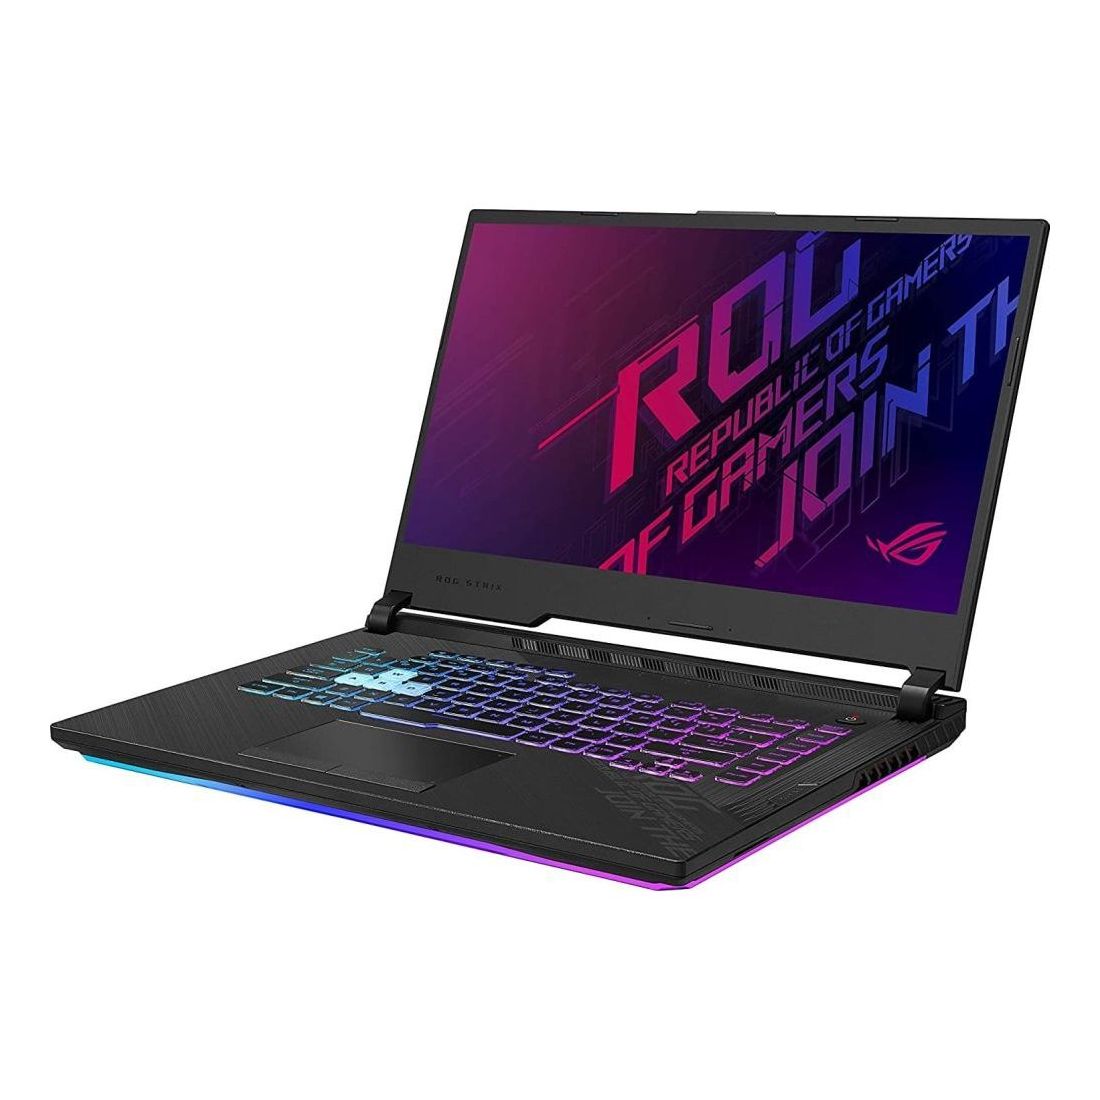 ASUS ROG Strix G15 Gaming Laptop i7-10750H/16GB/1TB SSD/NVIDIA GeForce RTX 2060 6GB/15.6 FHD/144Hz/Windows 10/Original Black